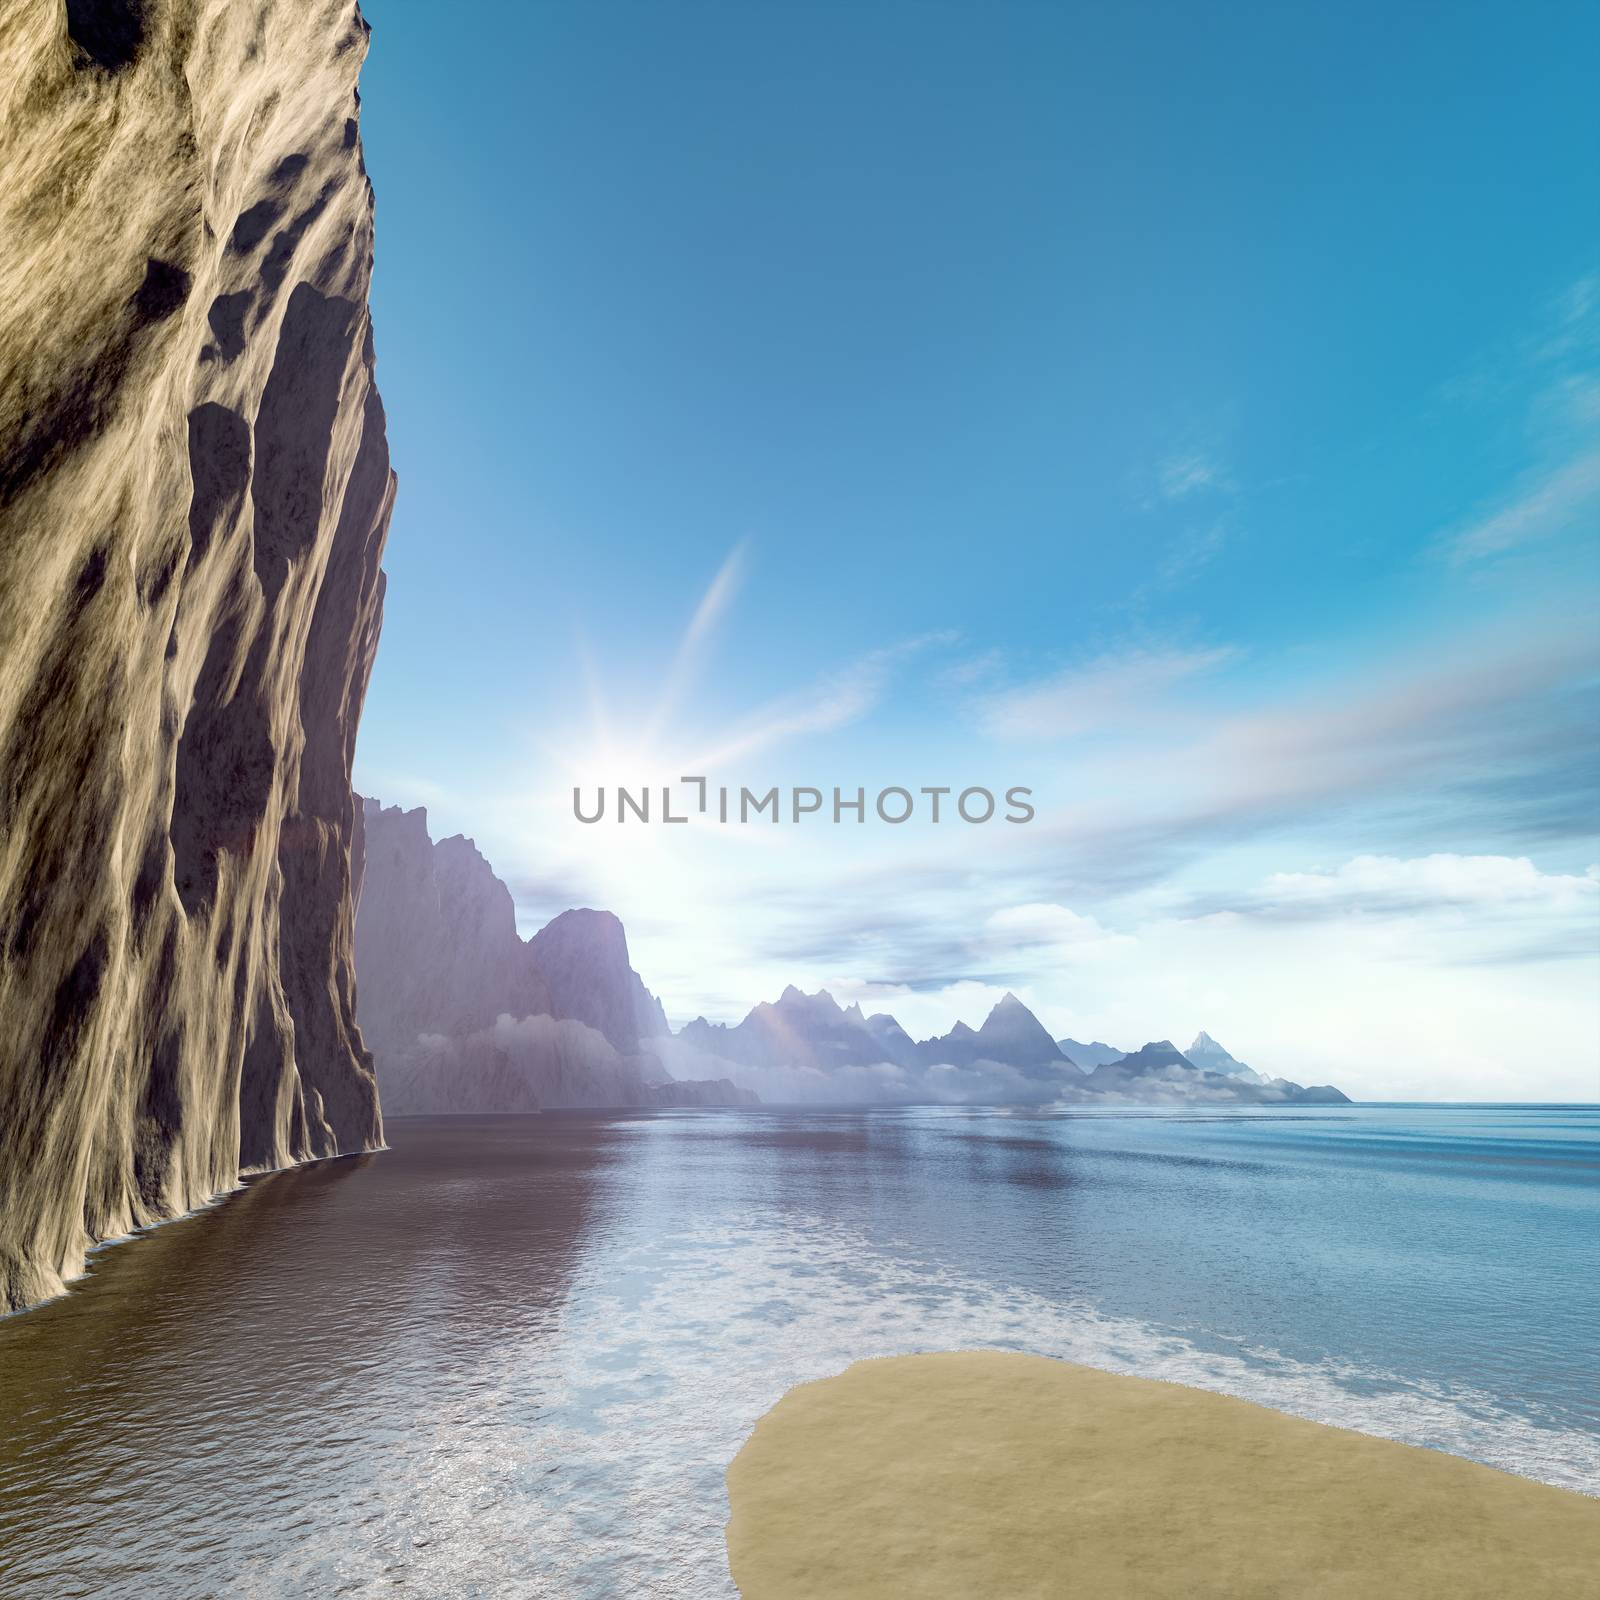 Beautiful rock face ocean scenery 3D illustration